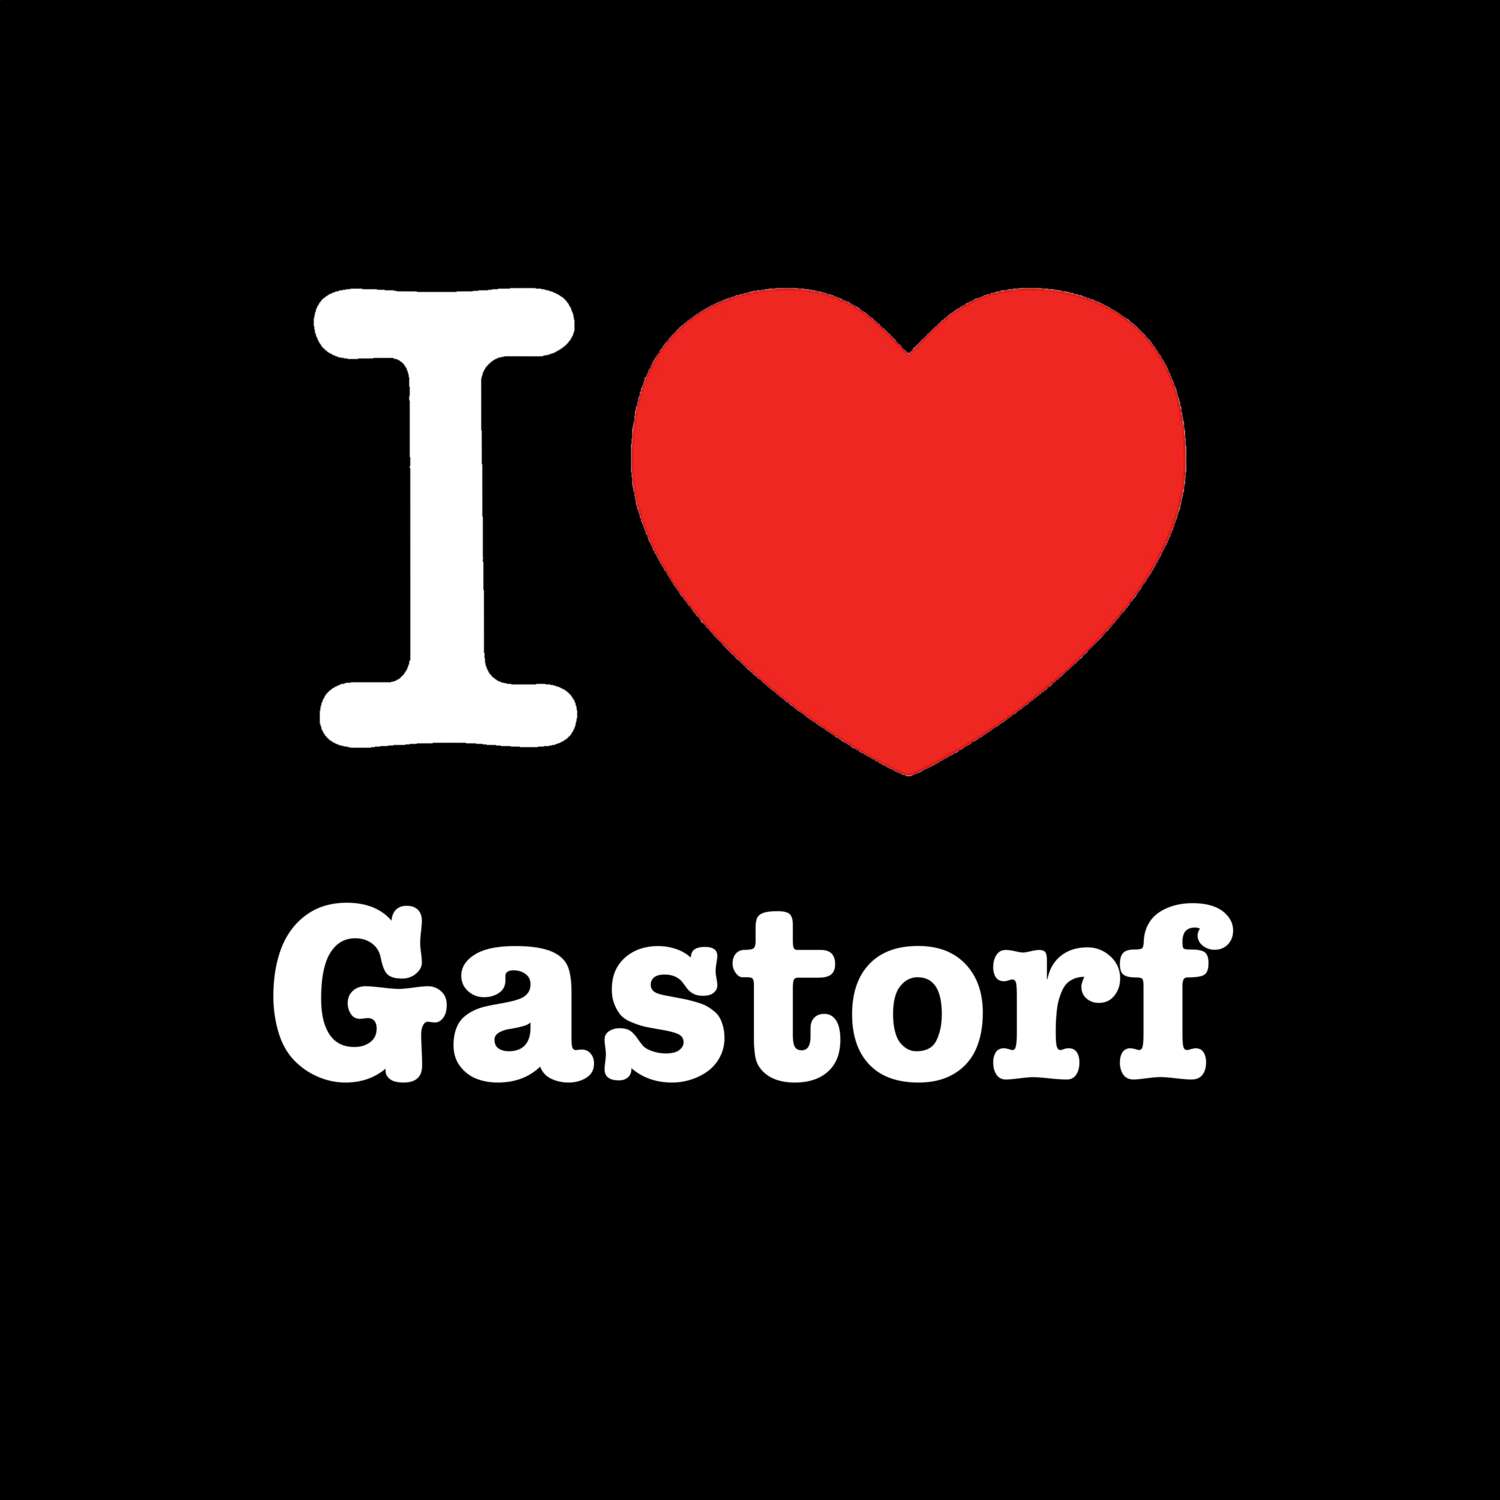 Gastorf T-Shirt »I love«